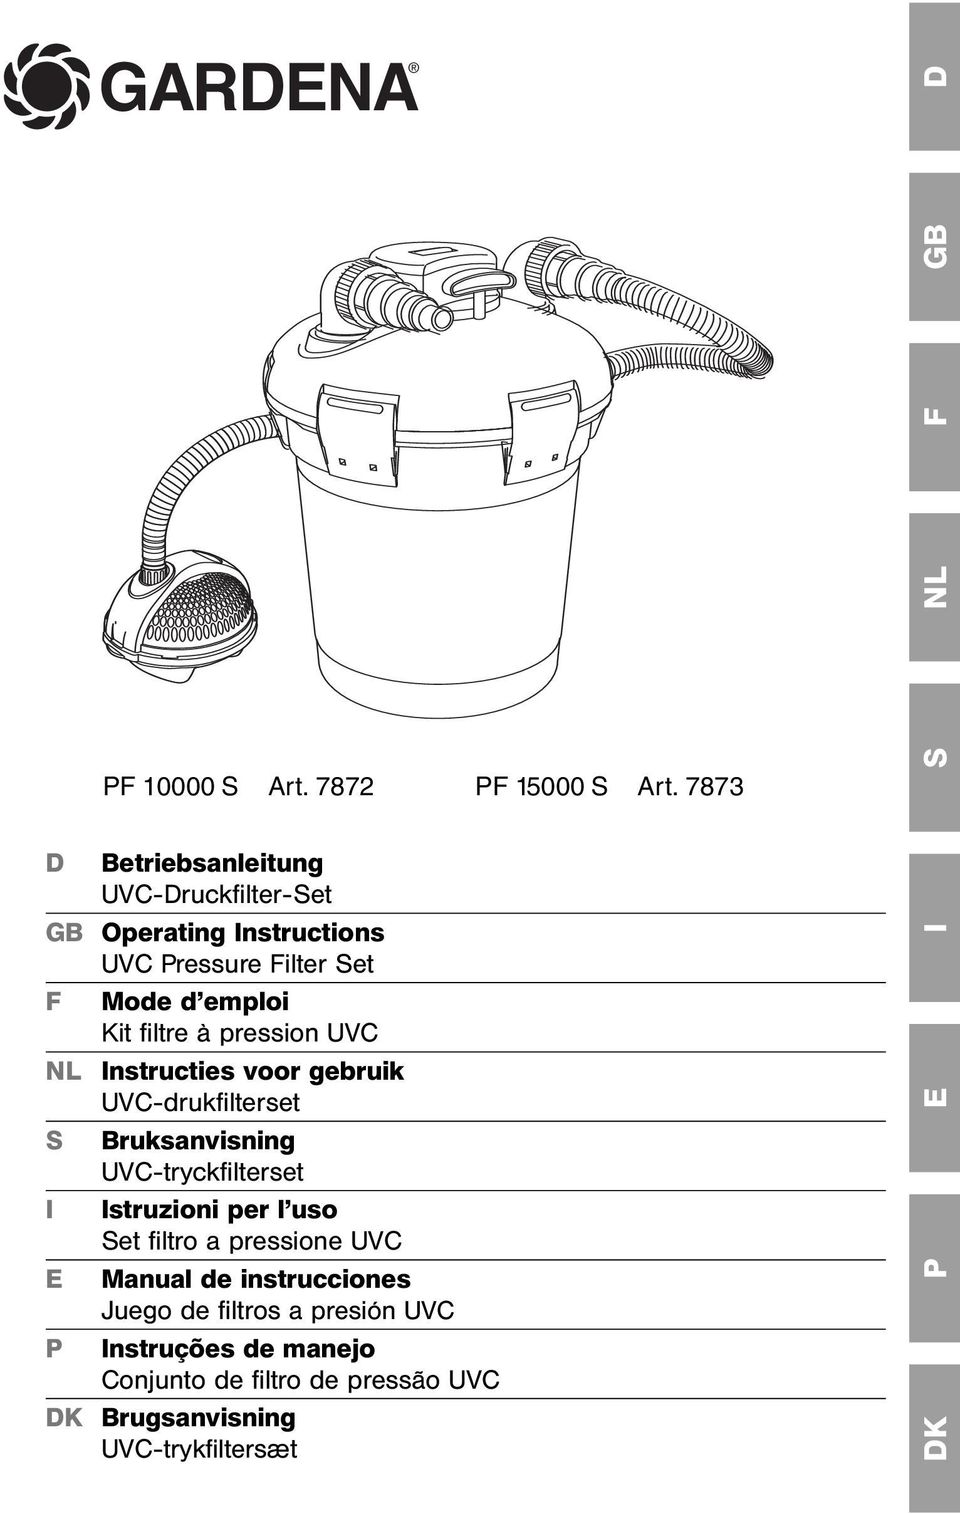 emploi Kit filtre à pression UVC Instructies voor gebruik UVC-drukfilterset Bruksanvisning UVC-tryckfilterset DK P E I